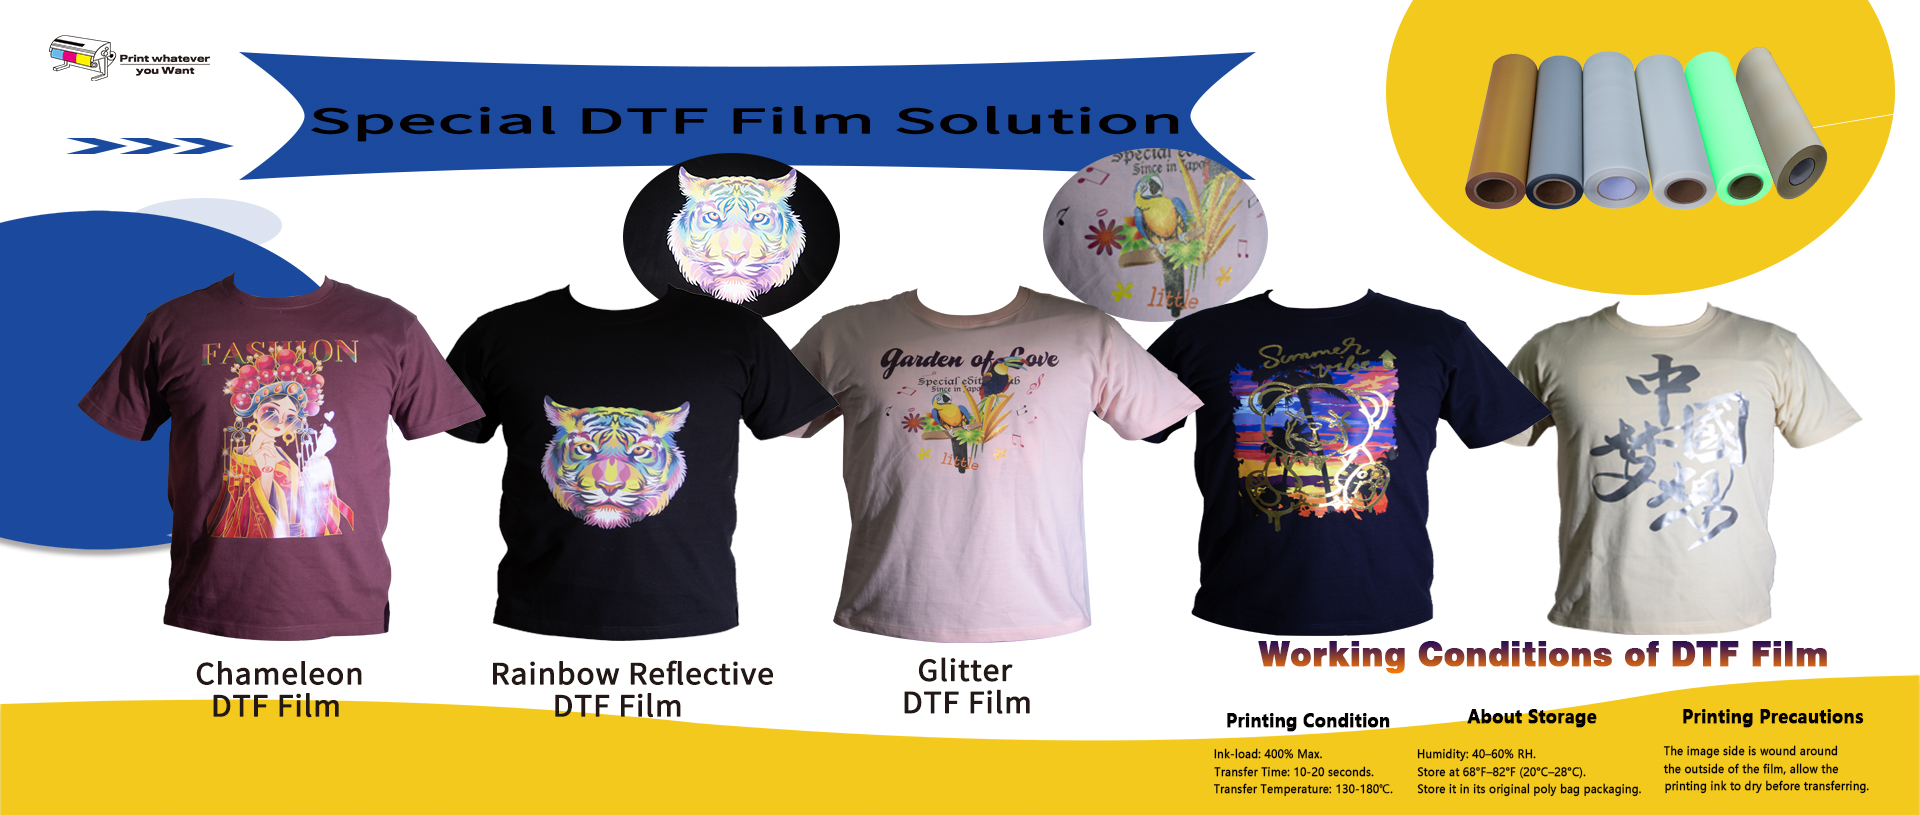 Special DTF Film Solution